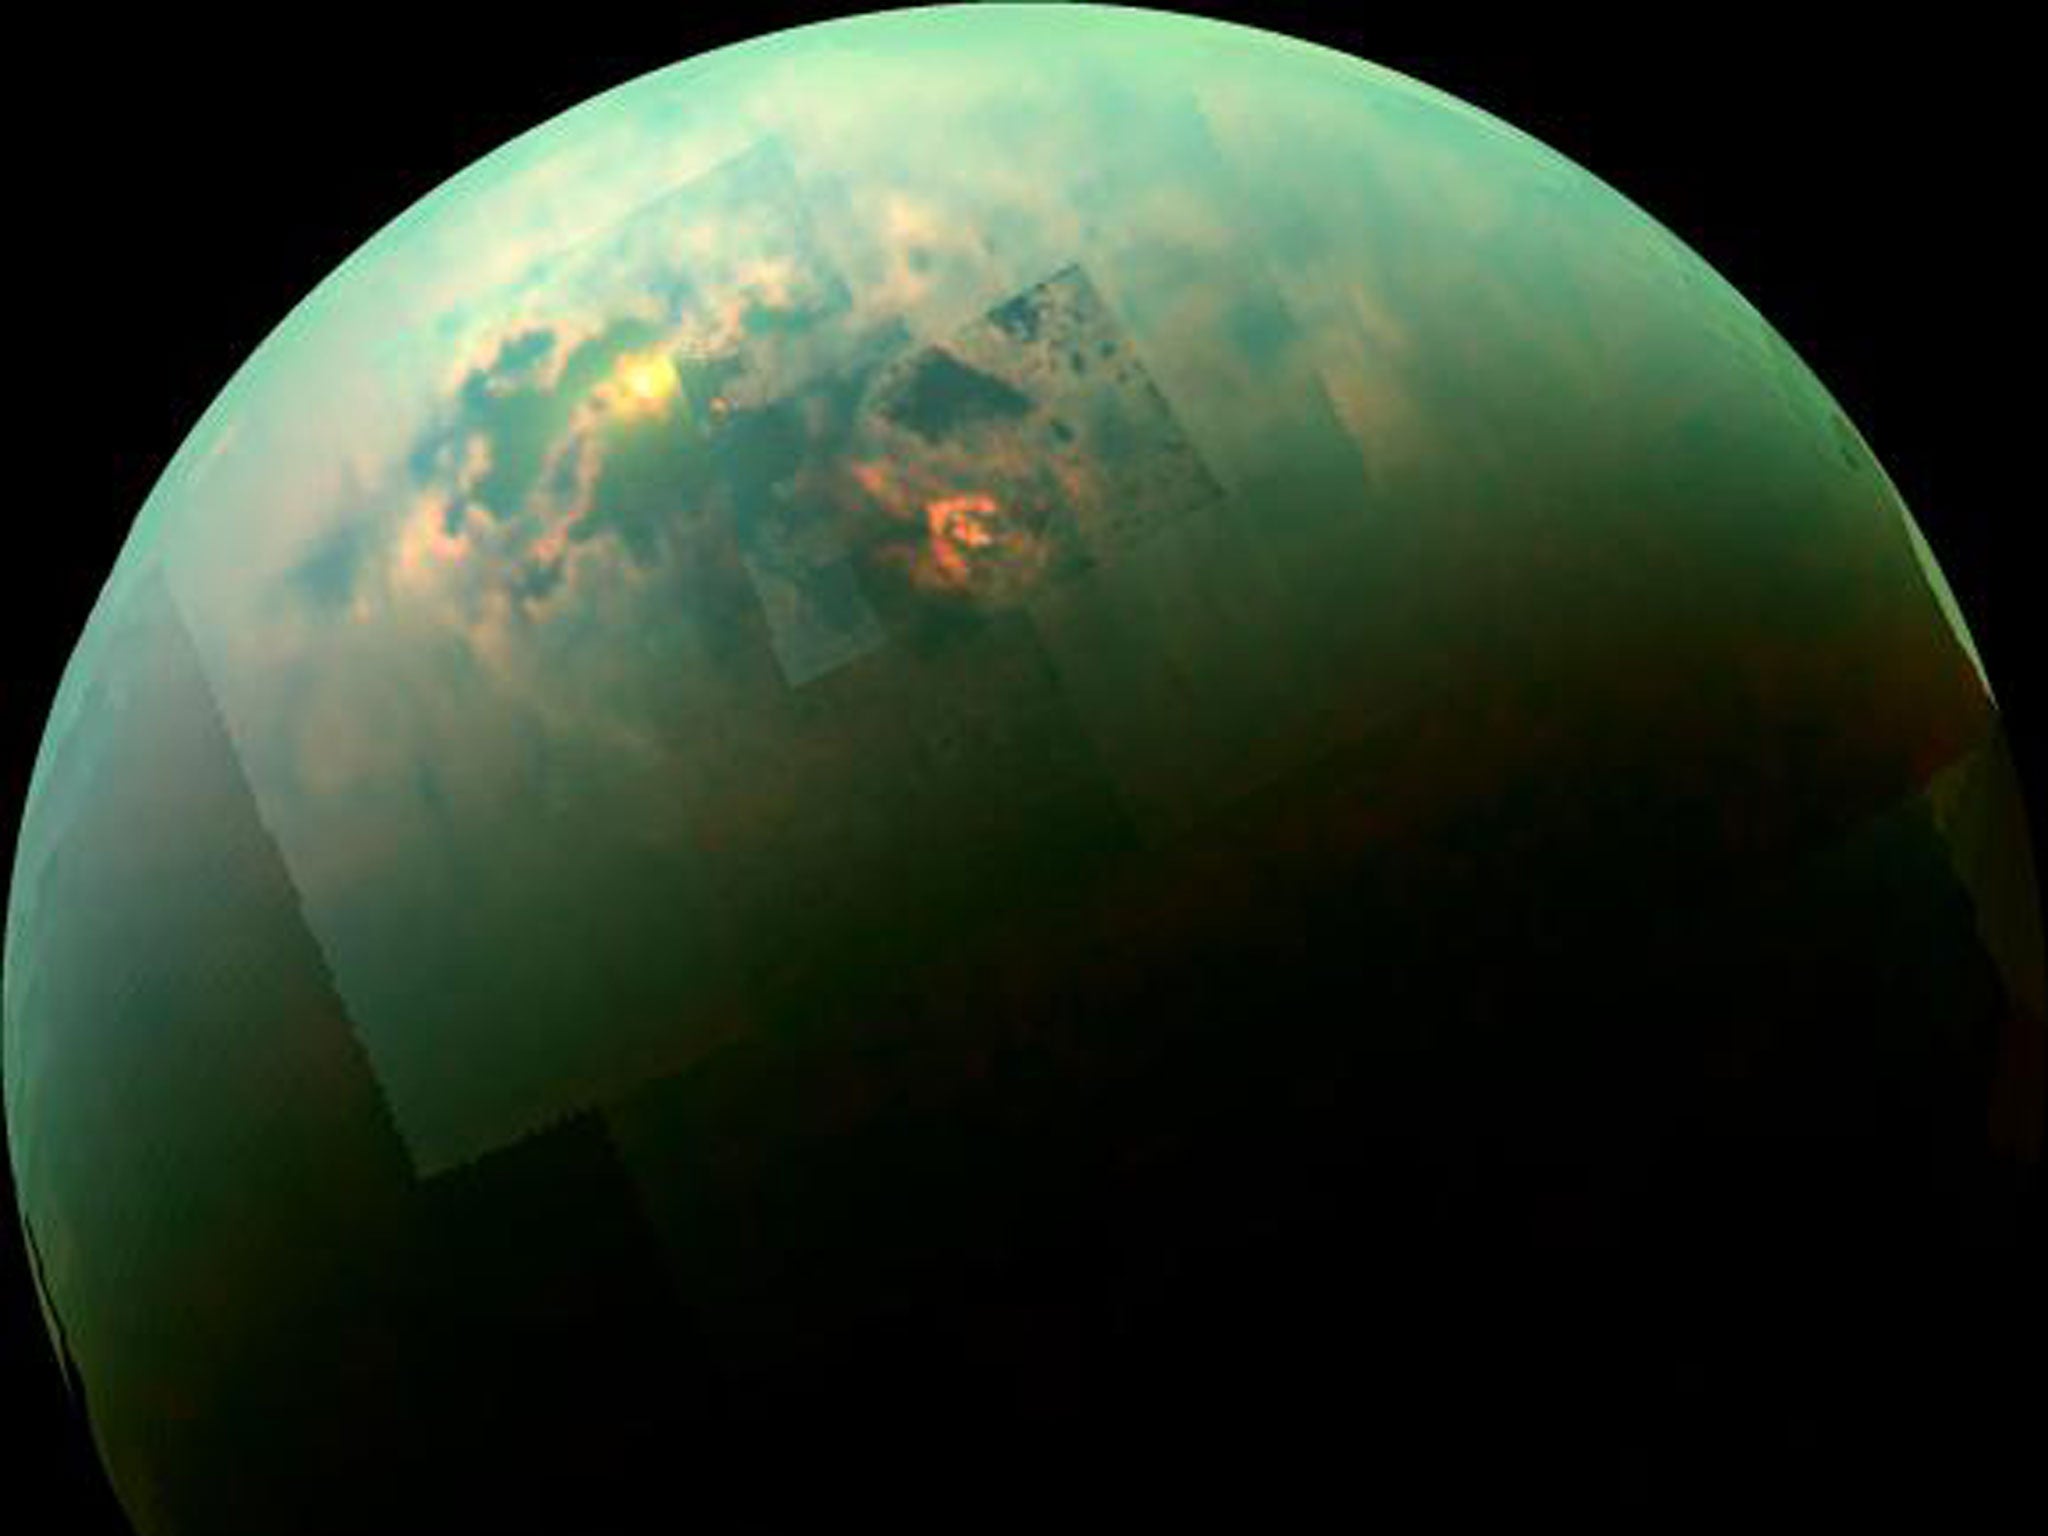 Saturn's moon Titan show by Nasa's Cassini Orbiter spacecraft